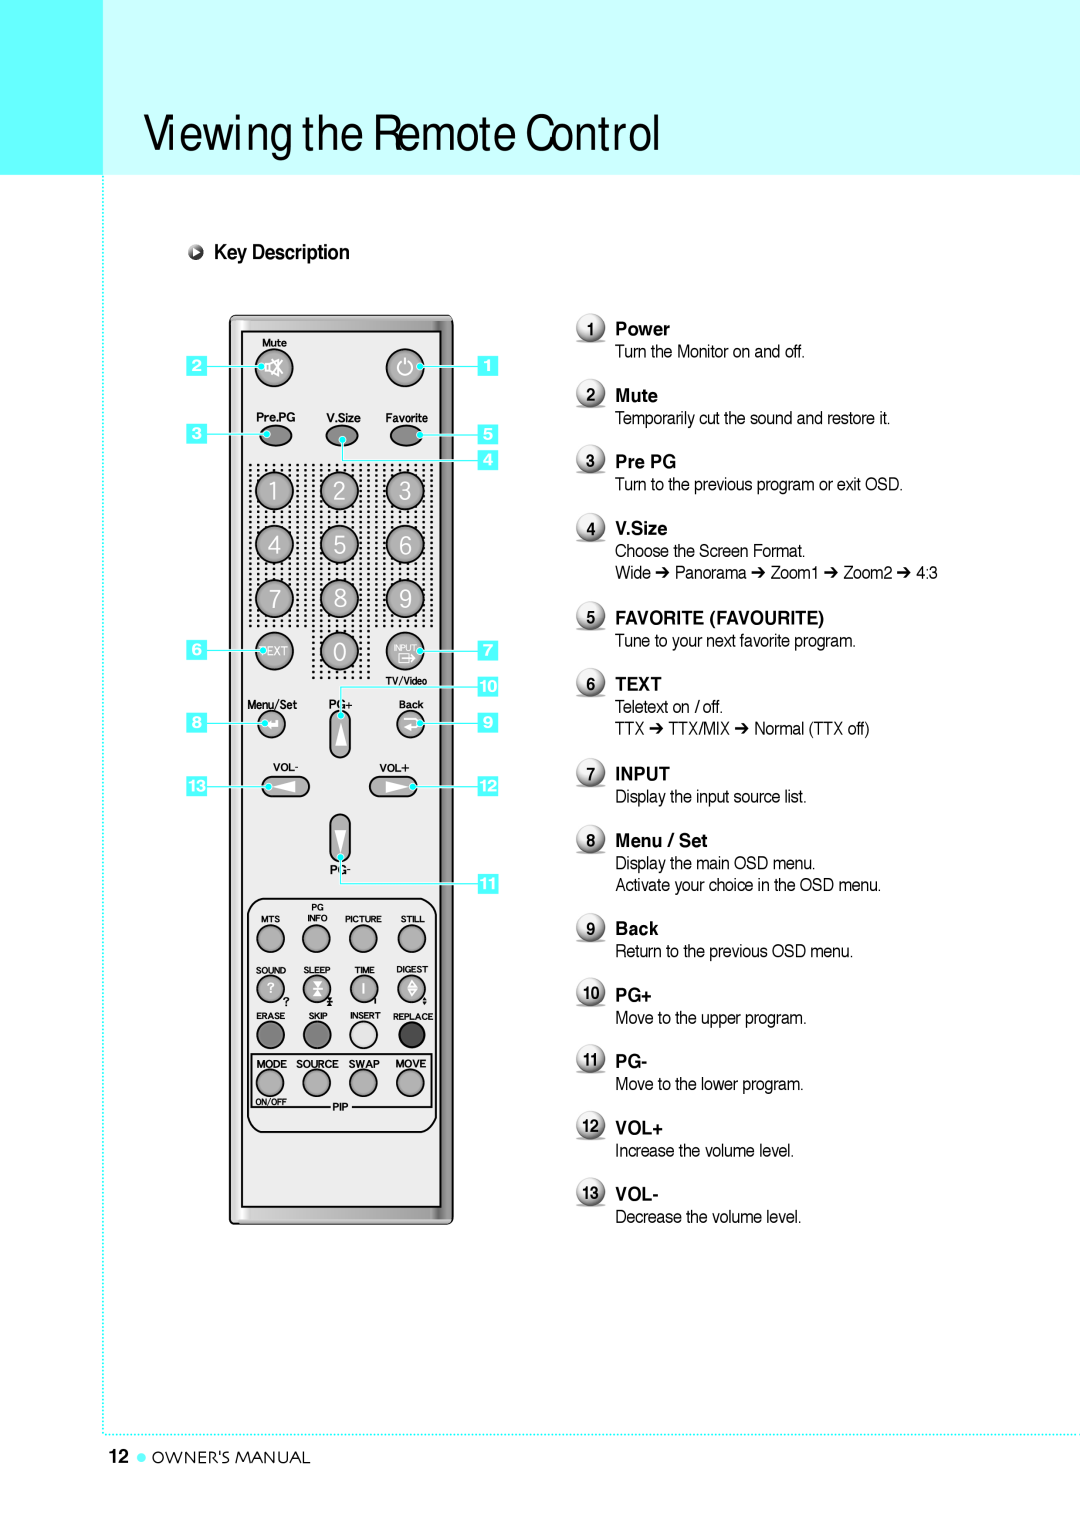 InFocus TD40 PAL manual Viewing the Remote Control, Key Description 